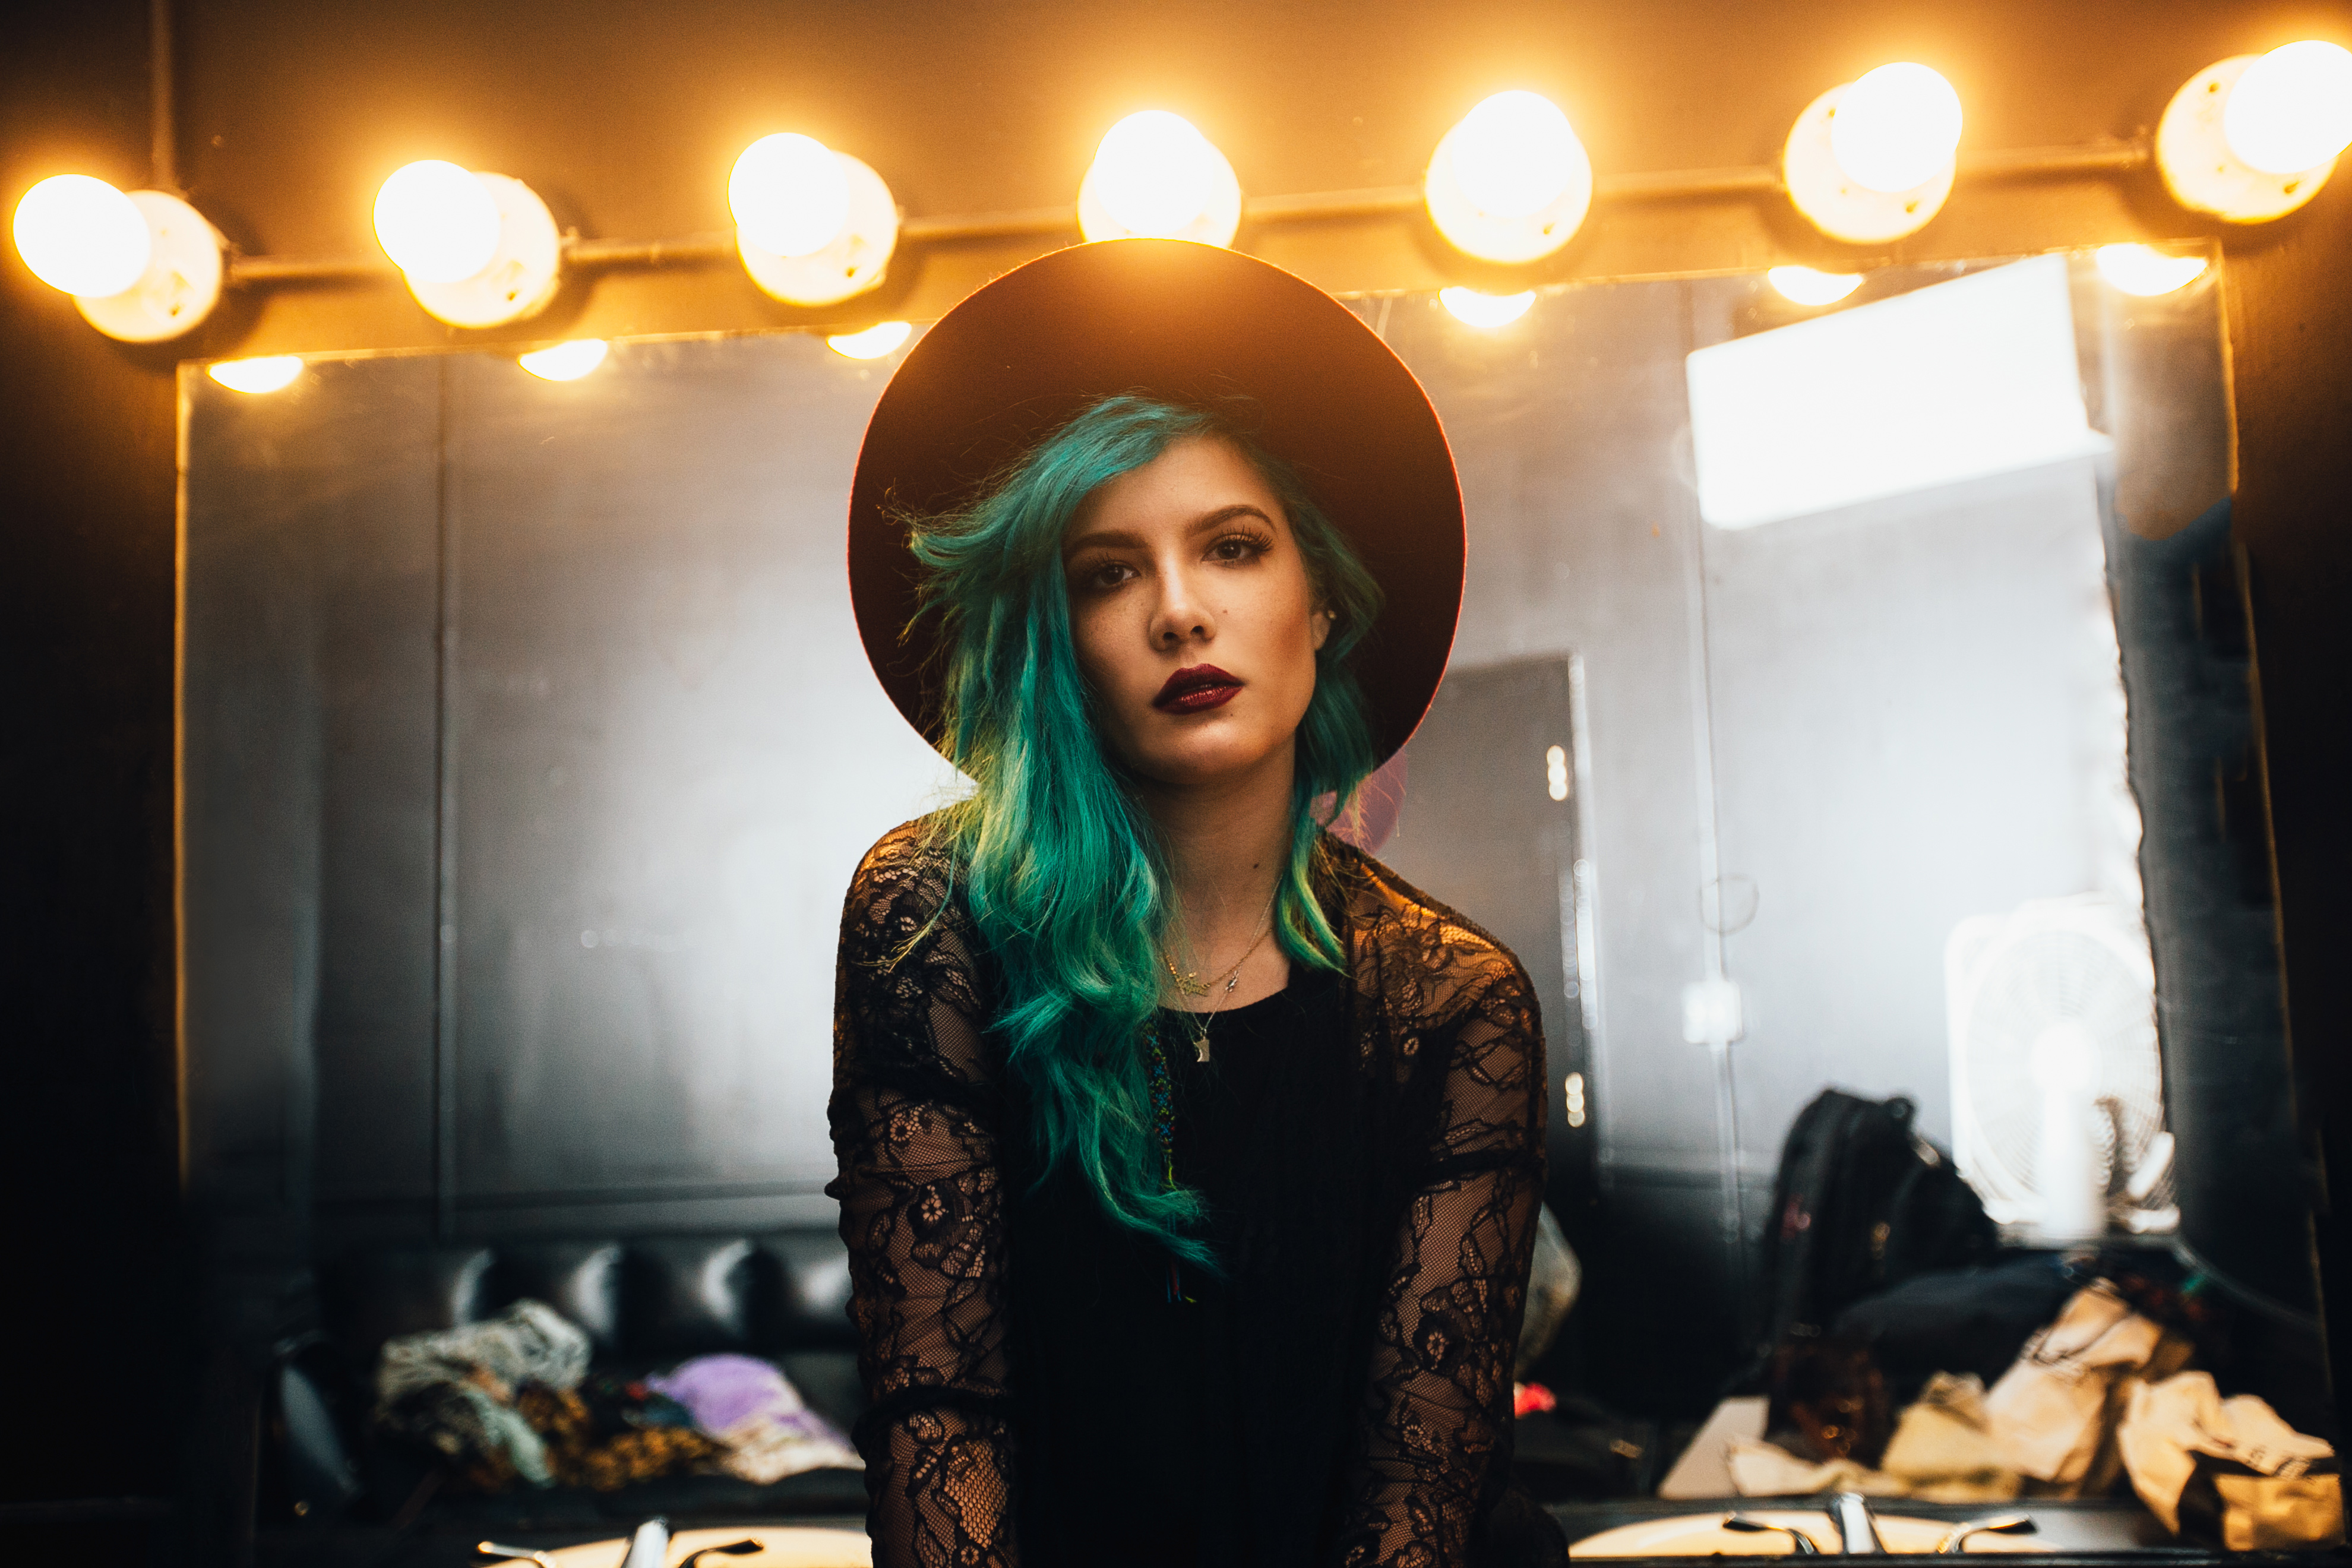 Blue Hair Halsey Singer Hat Lipstick Singer Woman 3960x2640